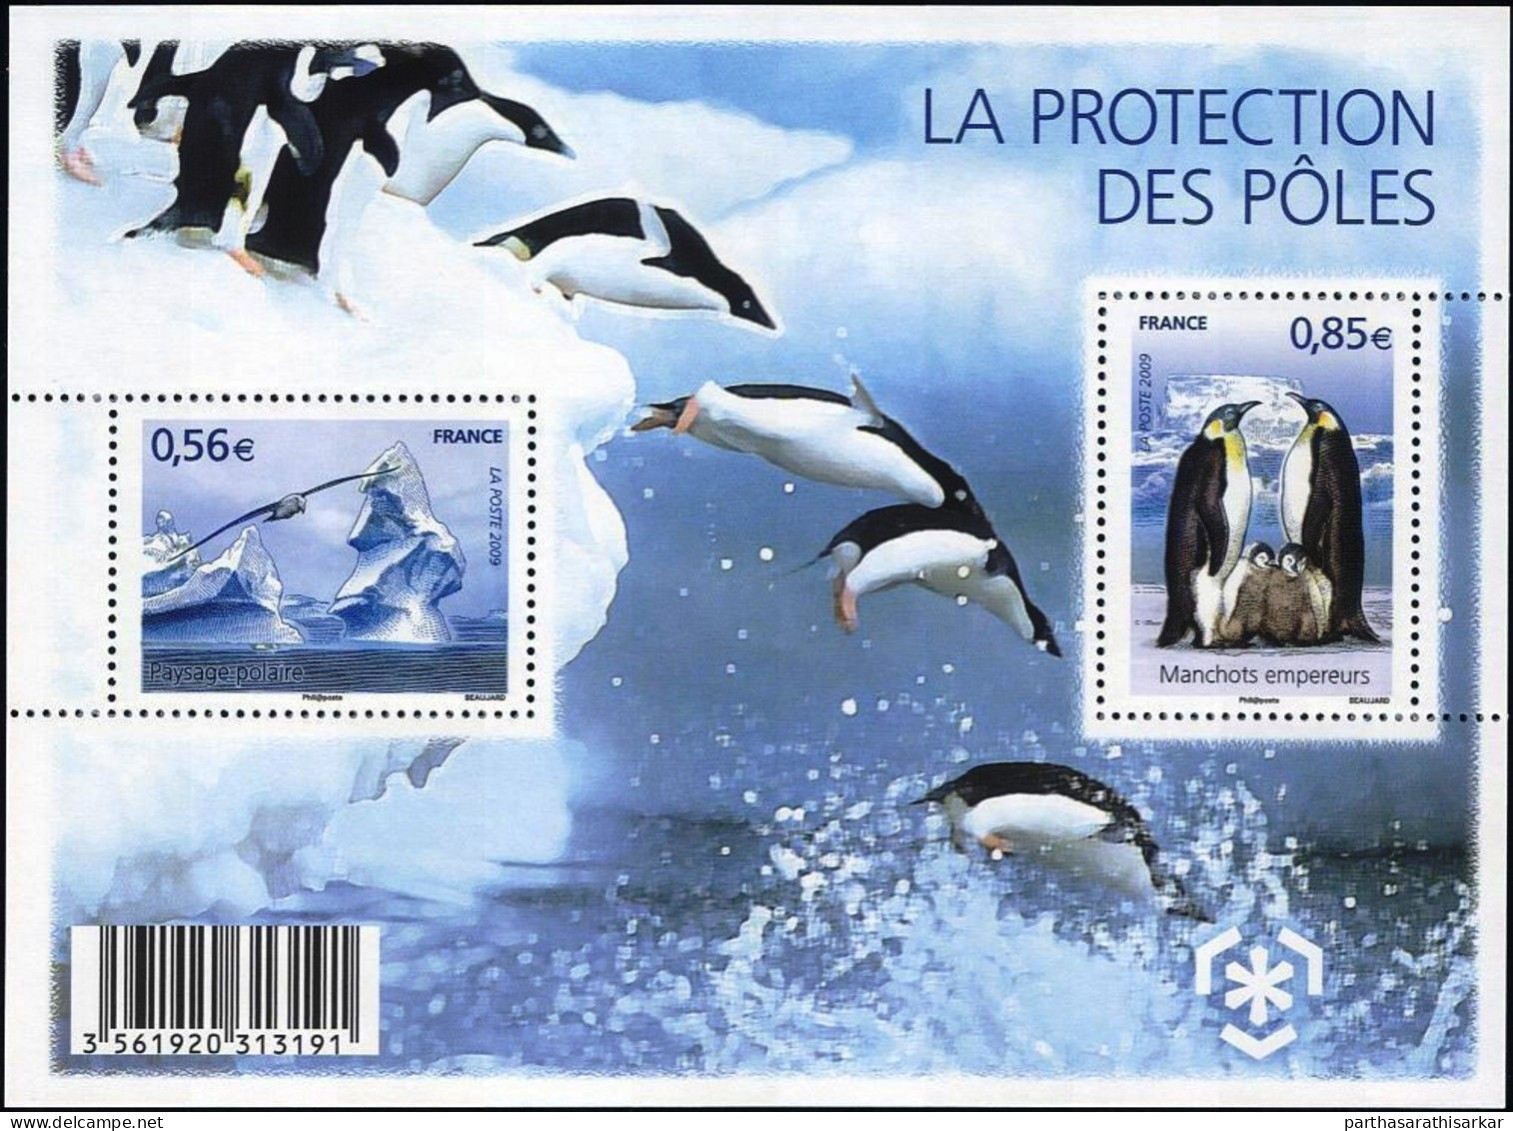 FRANCE 2009 PROTECTION OF THE POLAR REGIONS MINIATURE SHEET MS MNH - International Polar Year